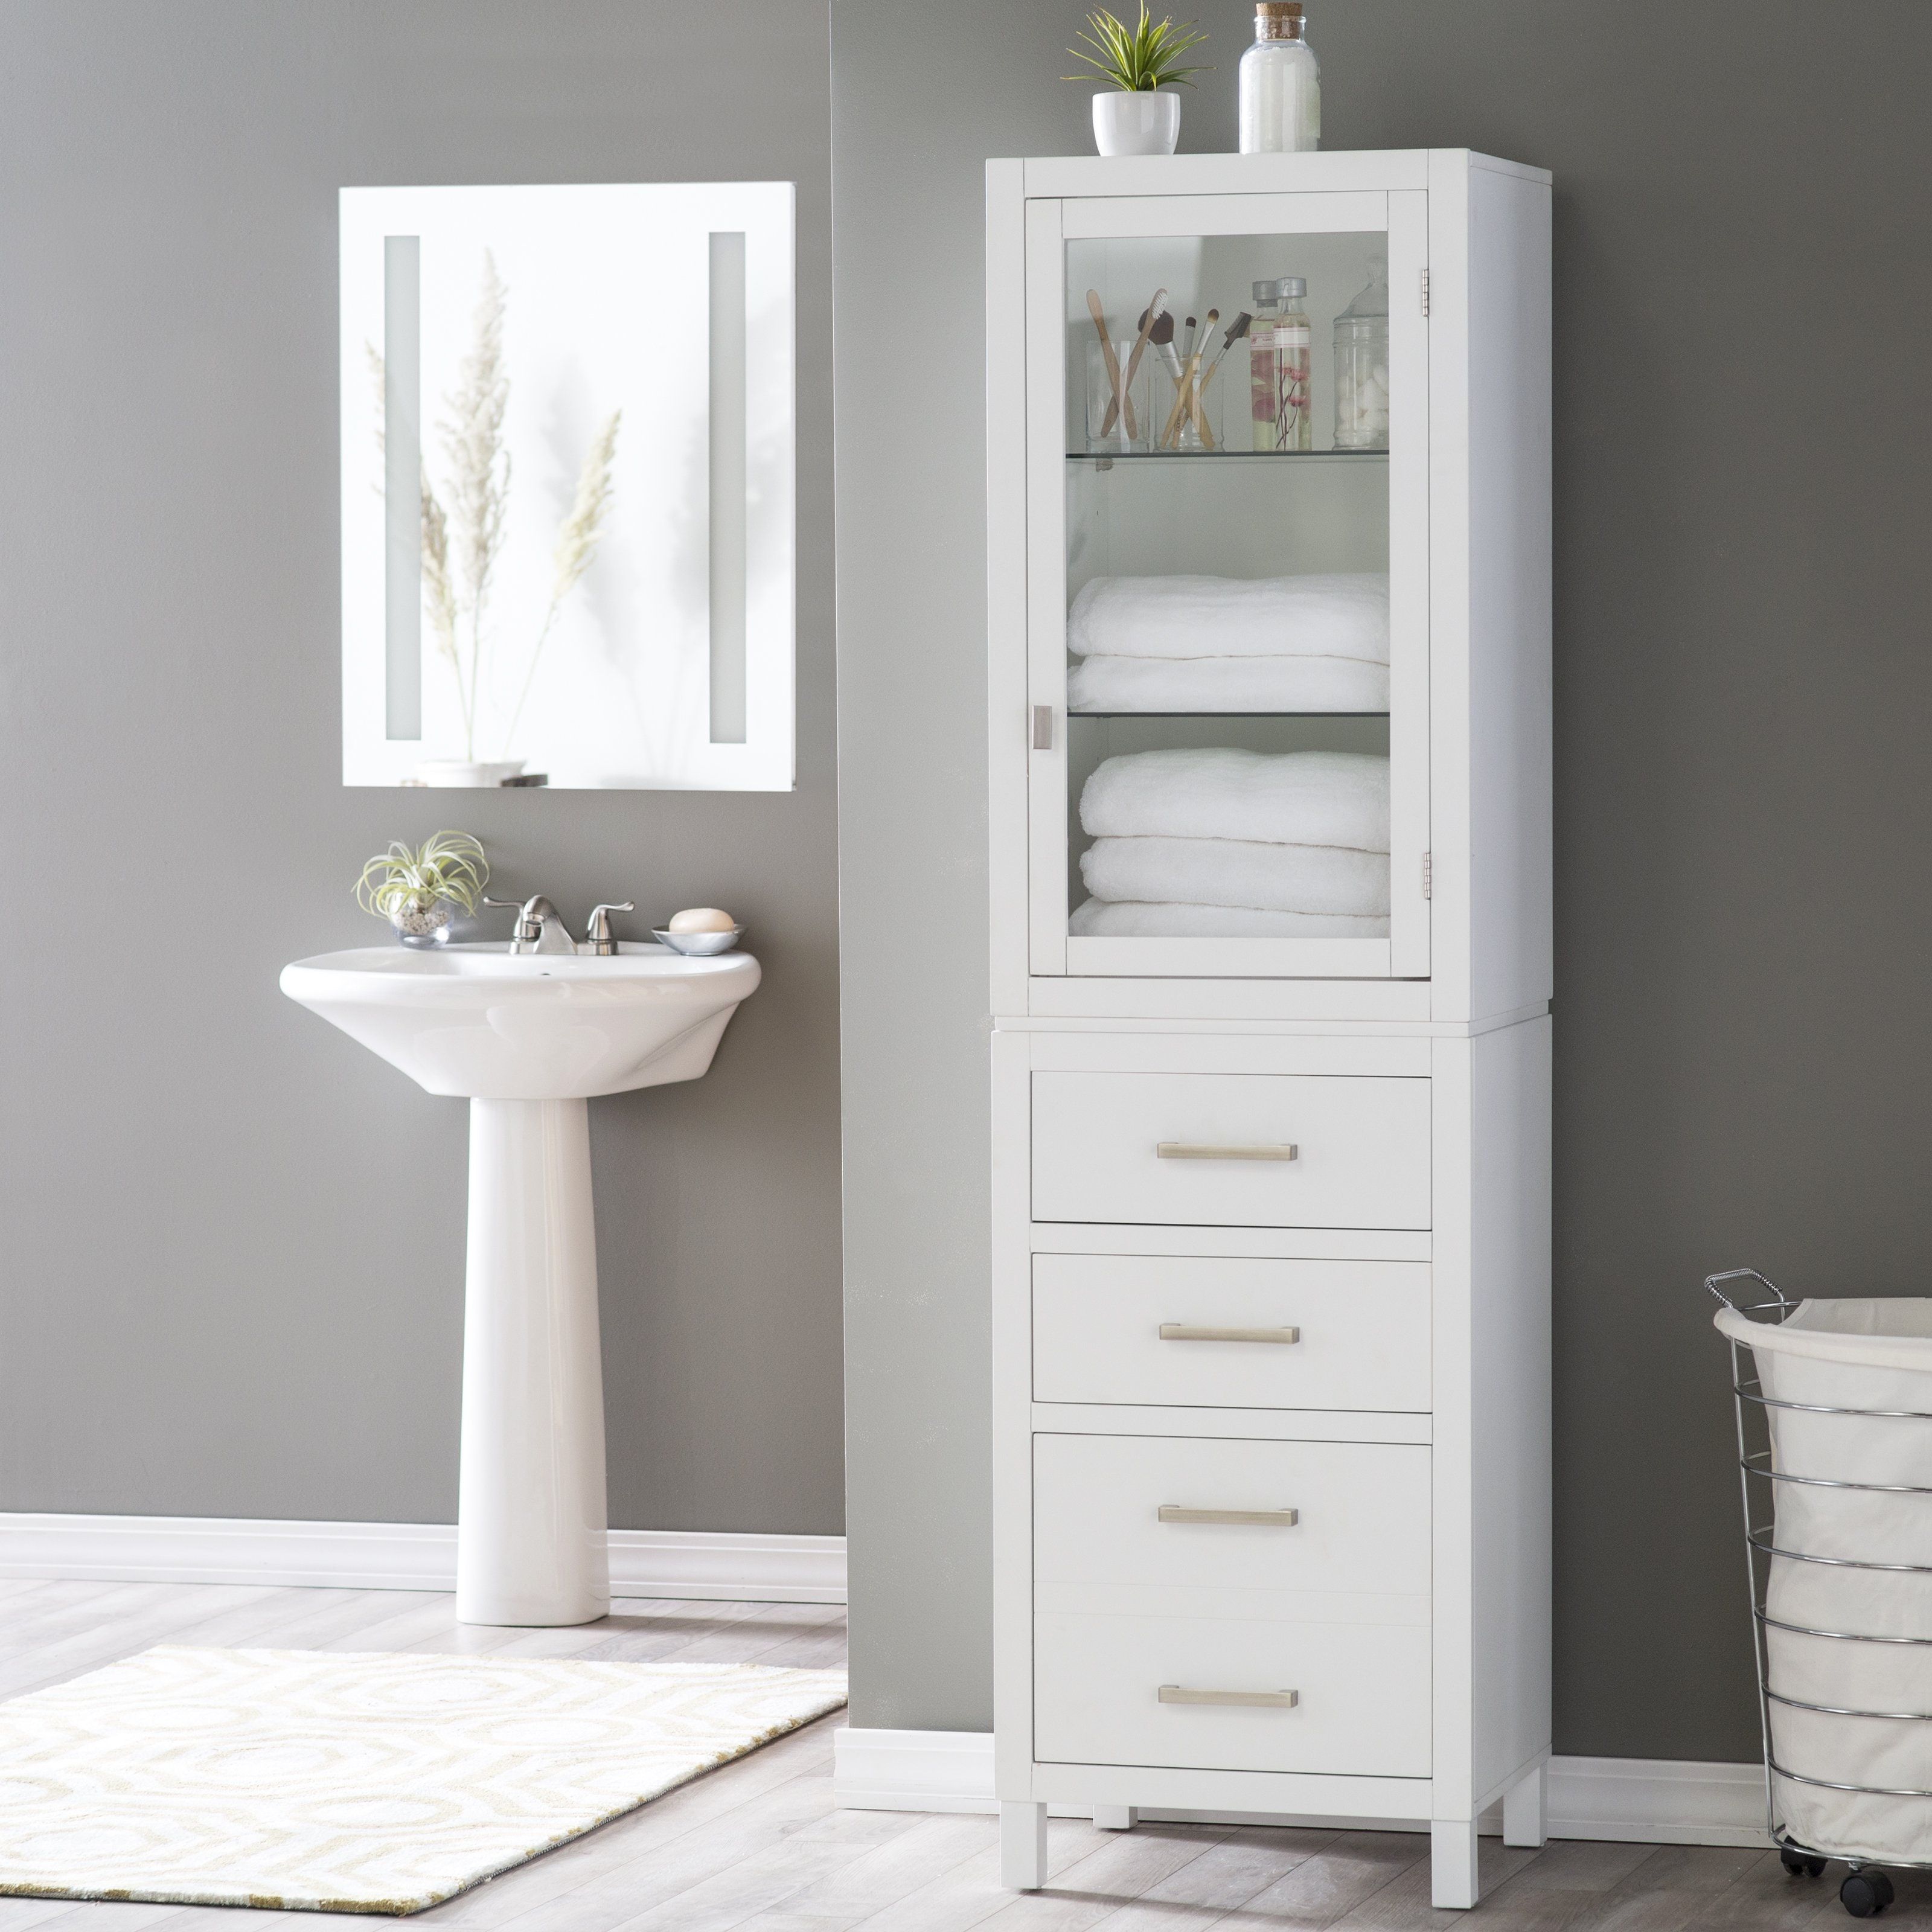 free standing linen cabinets for bathroom image result for modern freestanding linen closet SBOVJQP